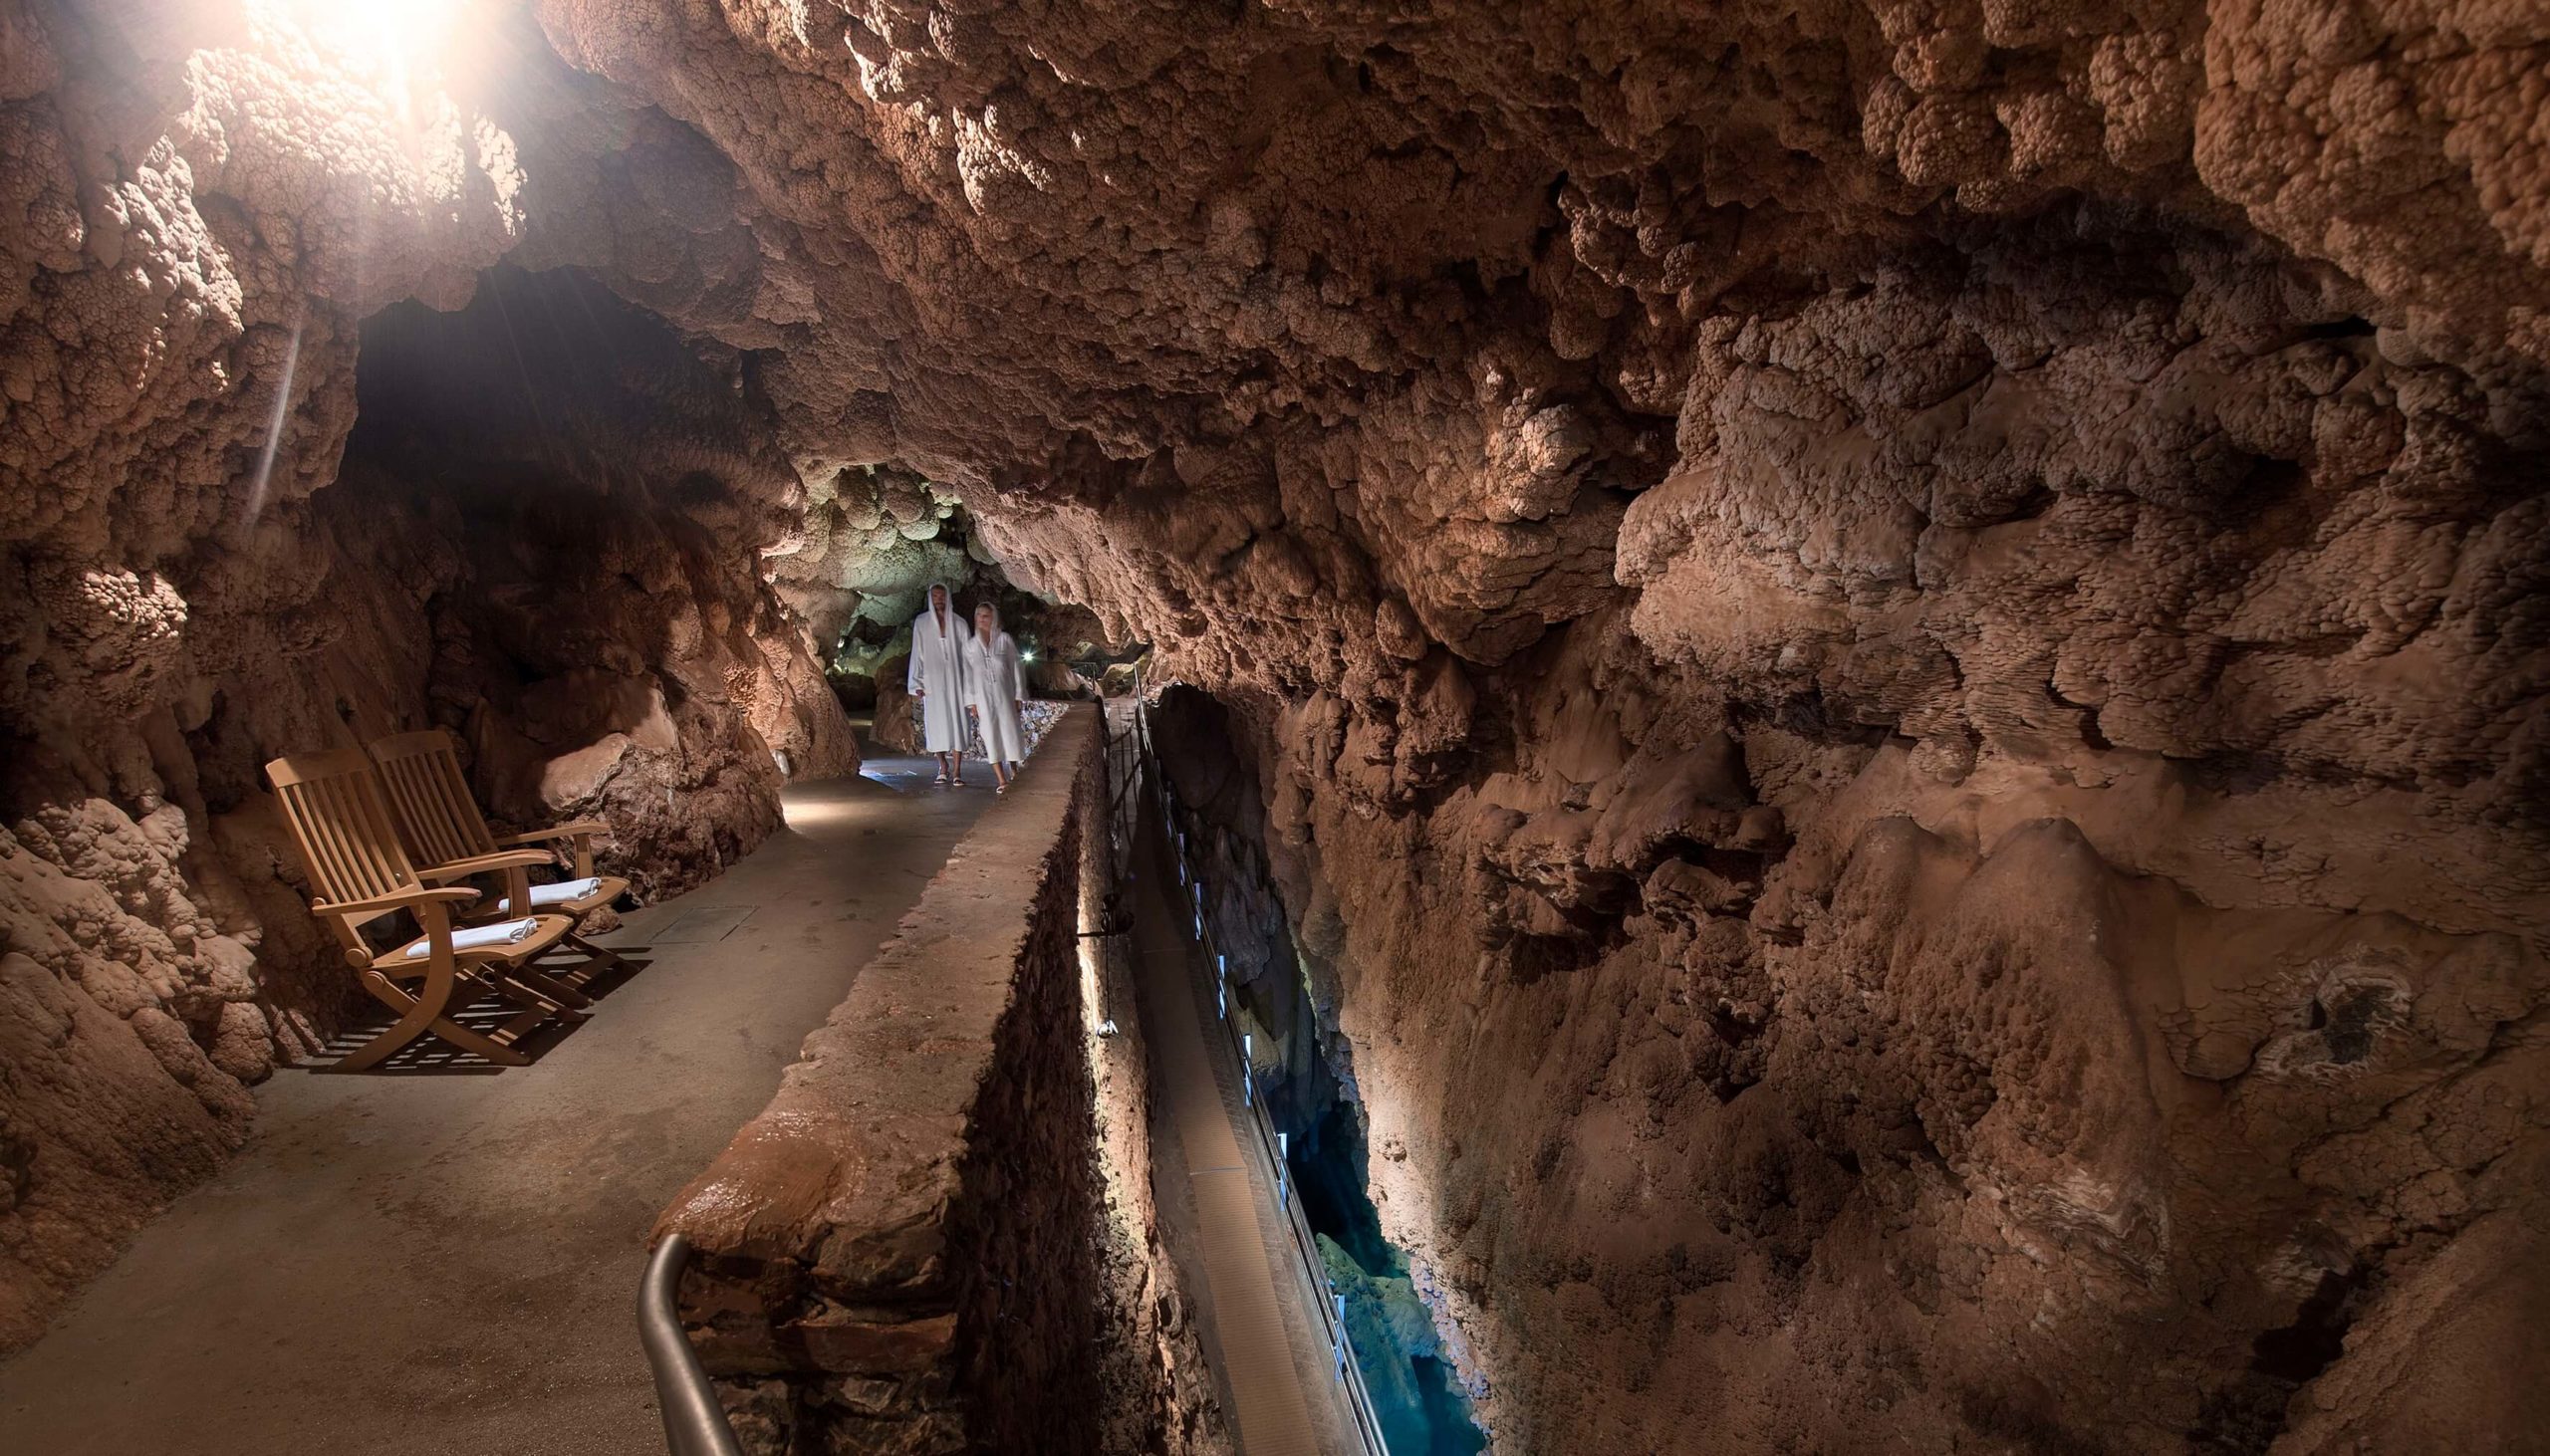 Thermal yoga - Grotta Giusti